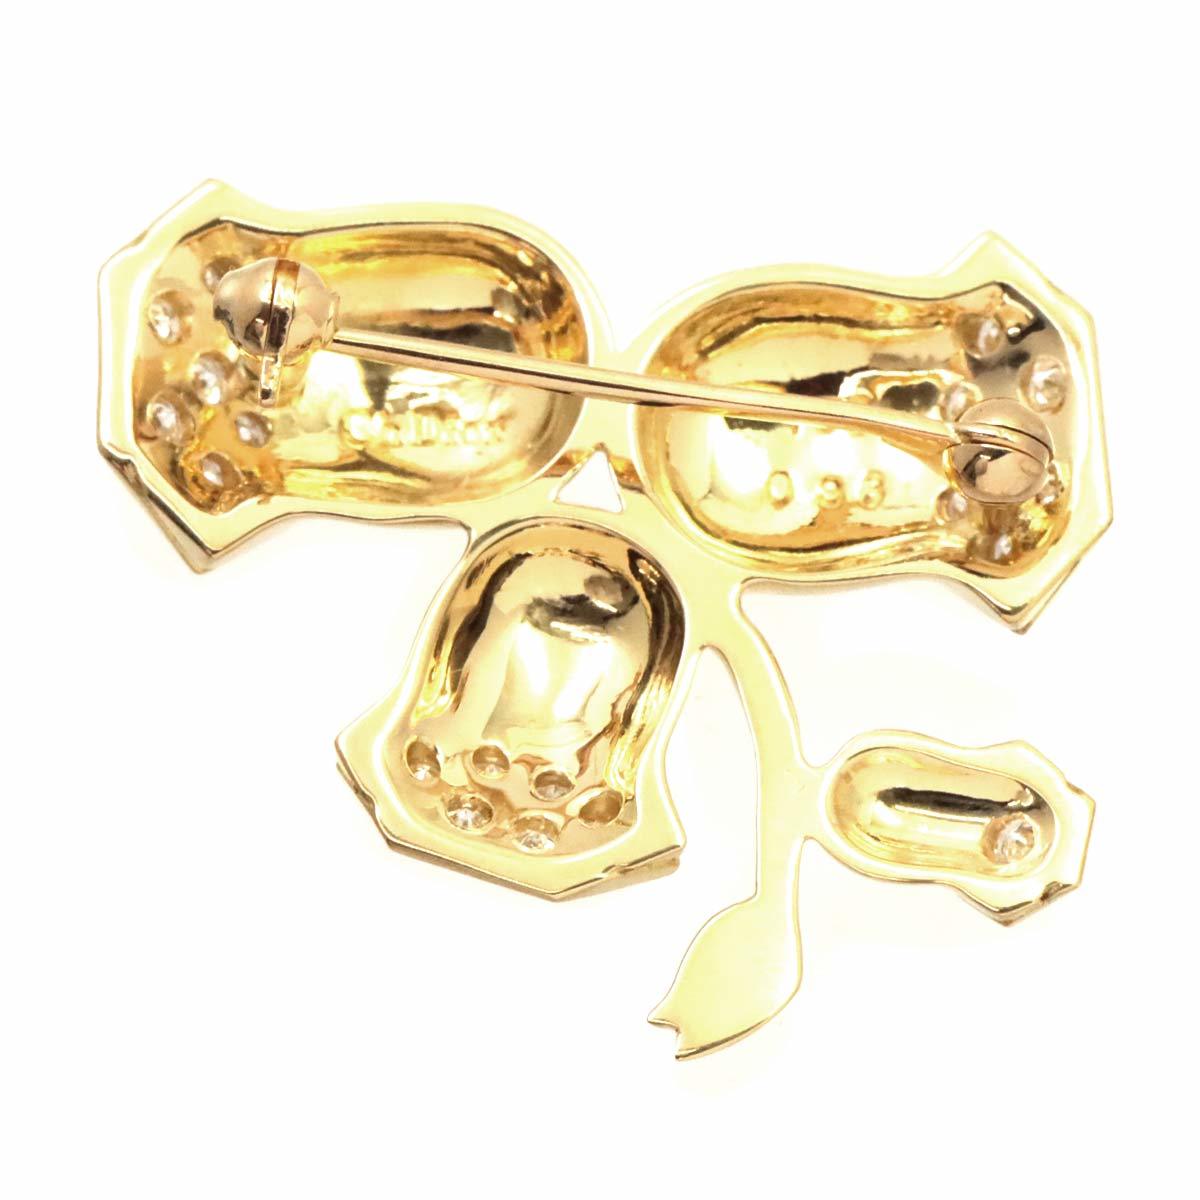  Christian Dior Dior diamond brooch 18K YG yellow gold 750 Diamond Brooch 90196599